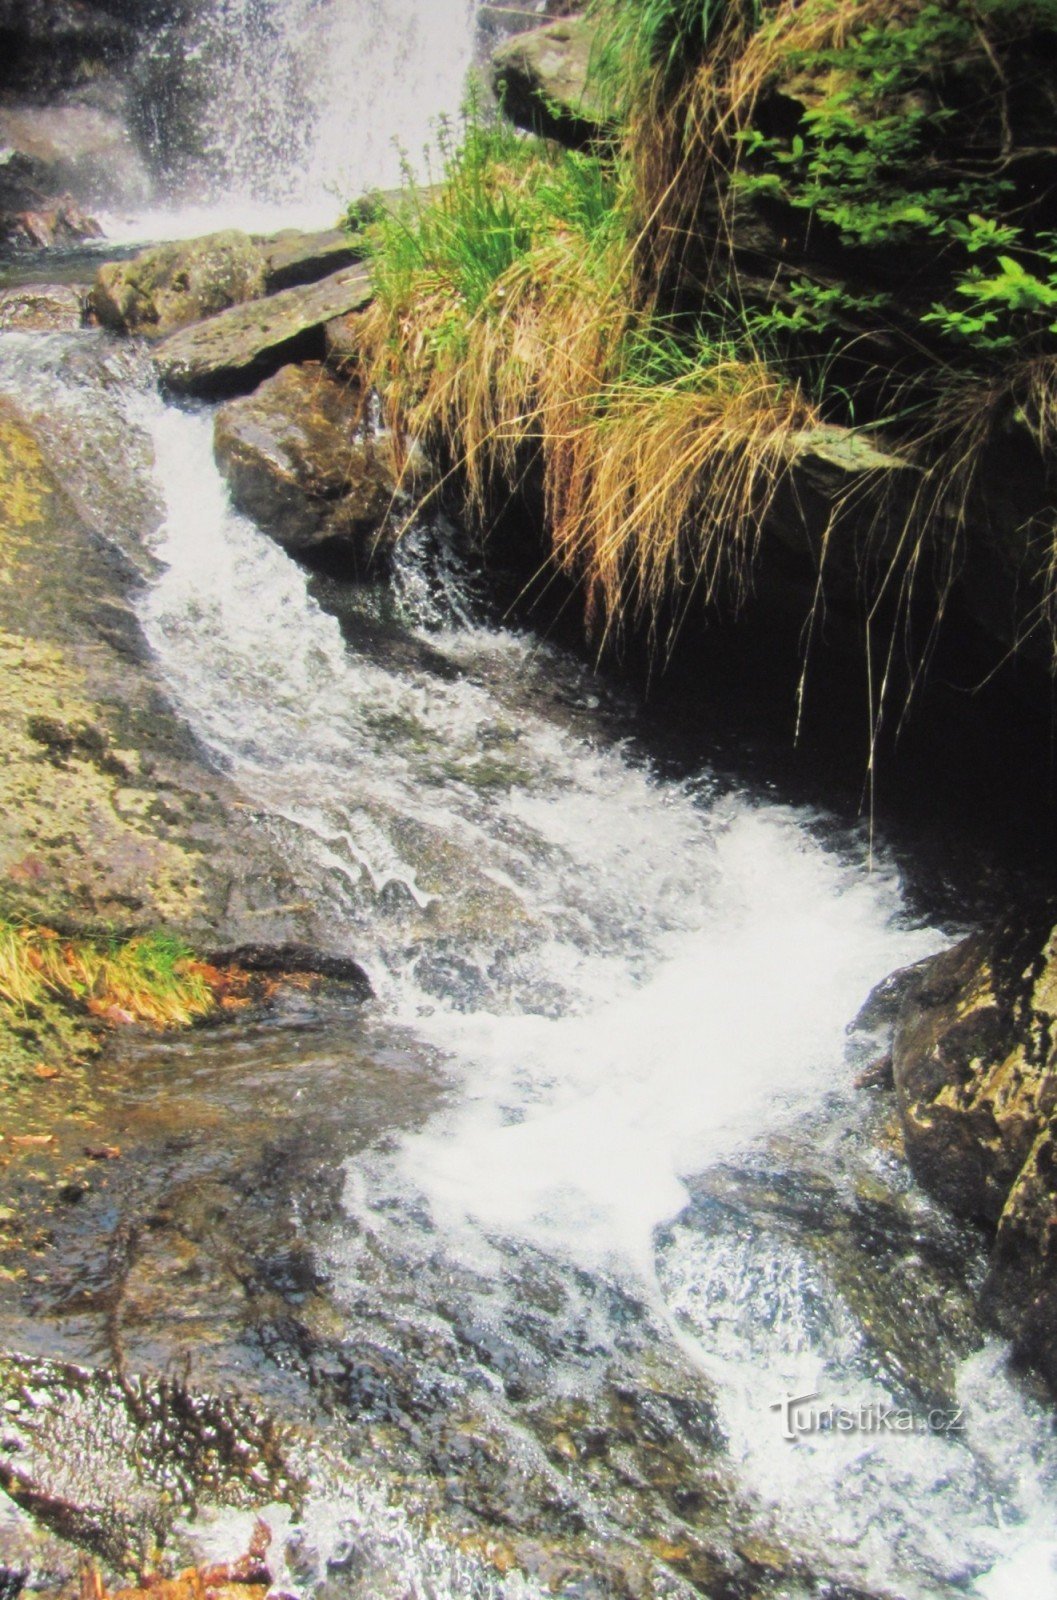 La cascadele de pe Borový potok